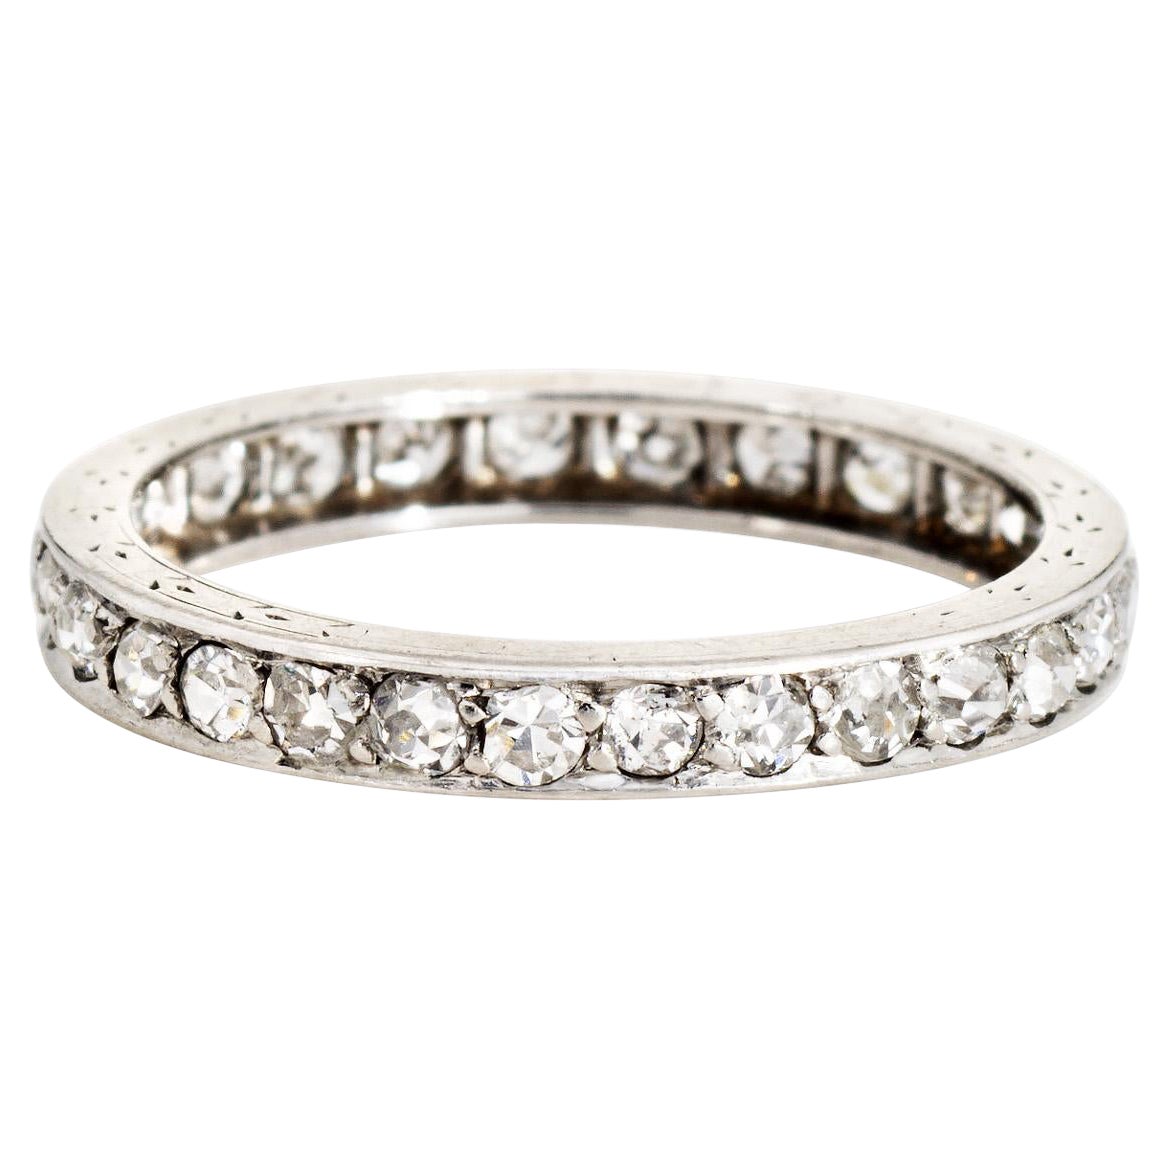 Vintage Deco Diamond Band Sz 5.75 Platinum Wedding Ring Eternity Fine Jewelry For Sale